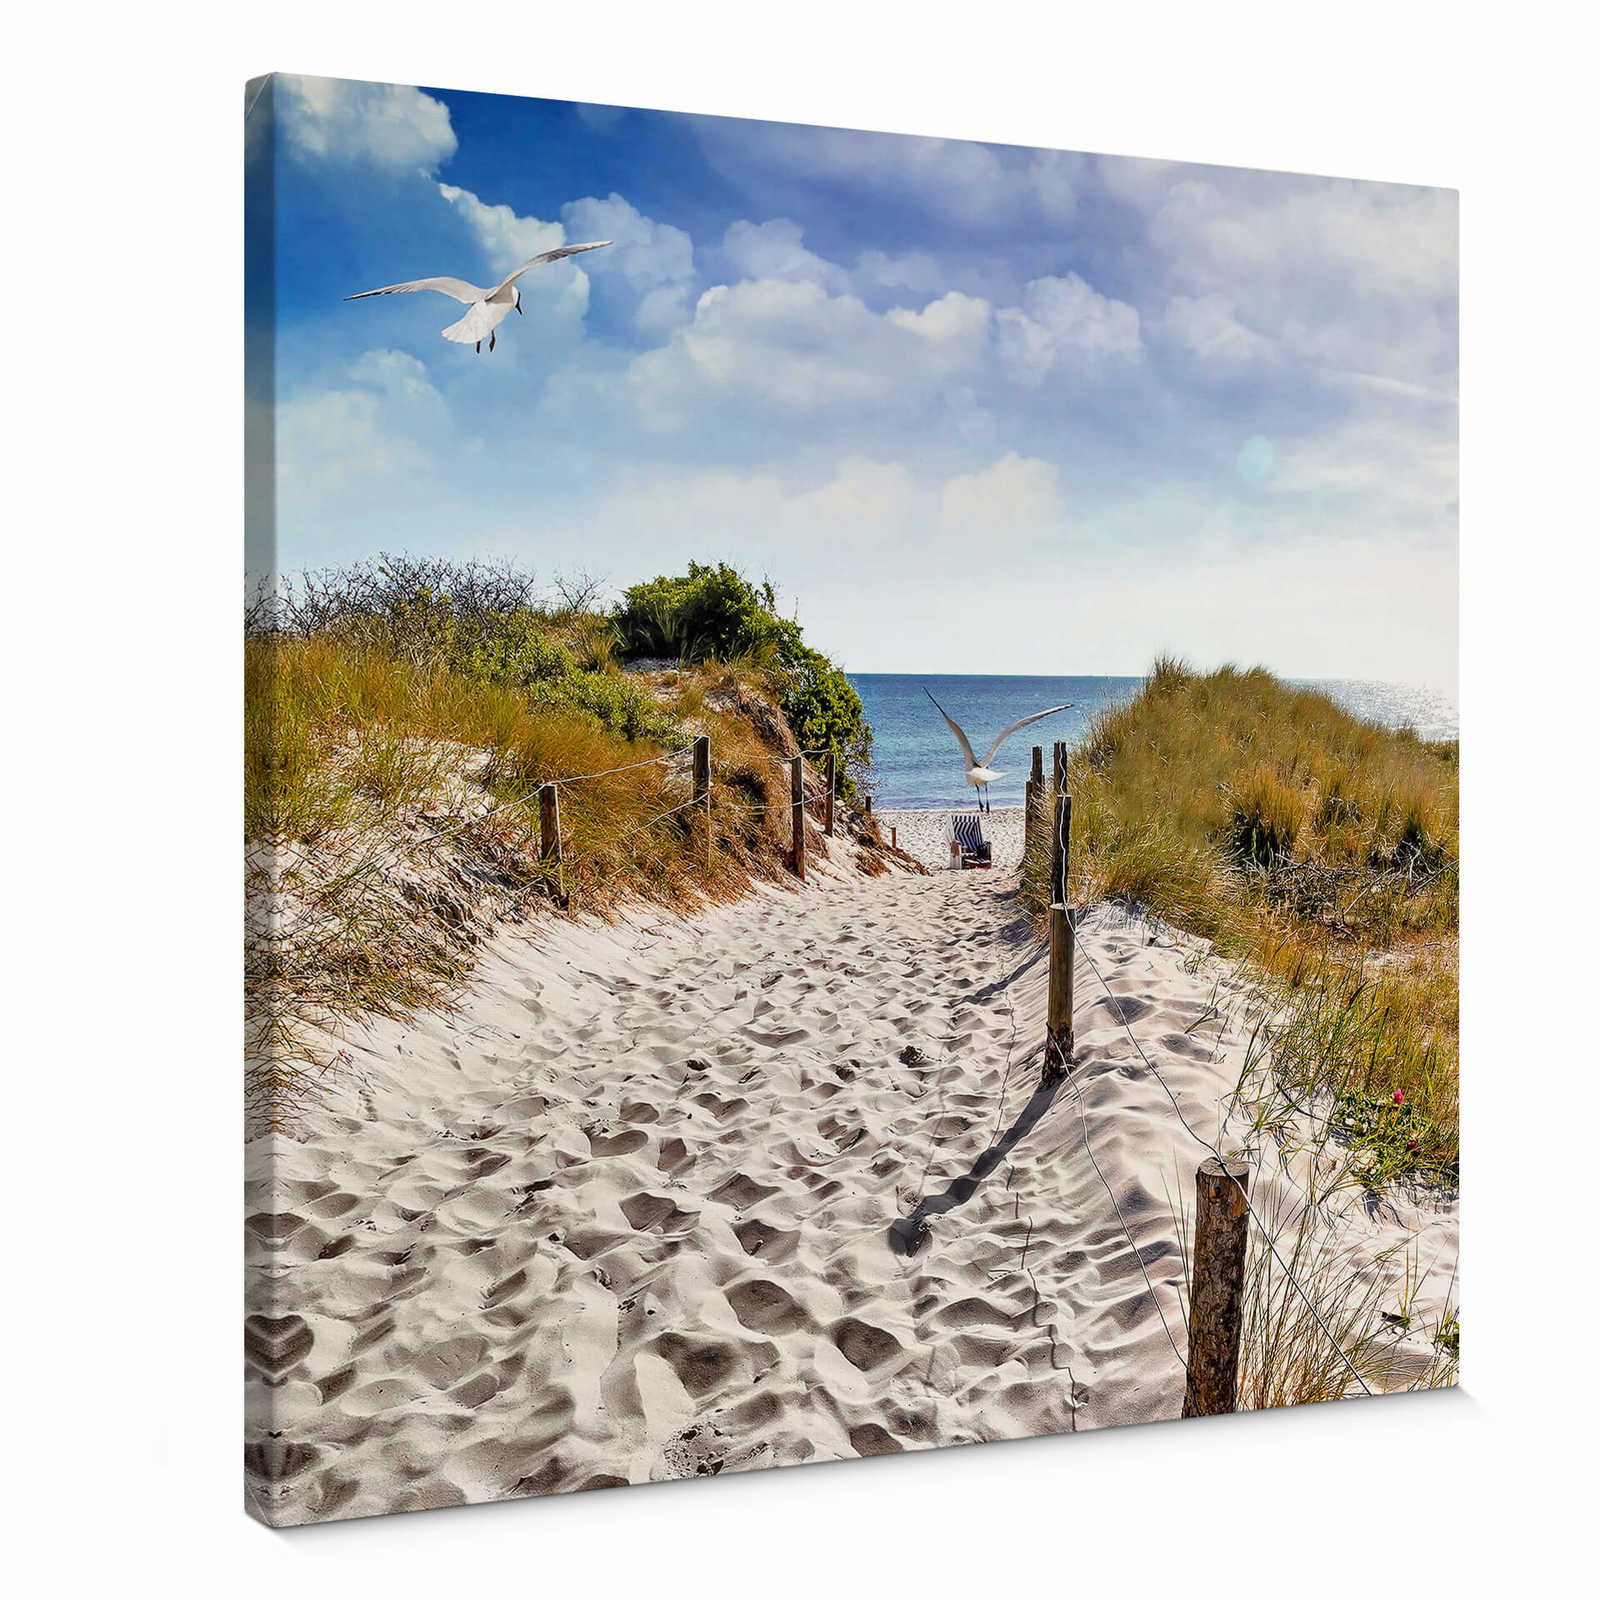         Path to the beach square canvas print
    